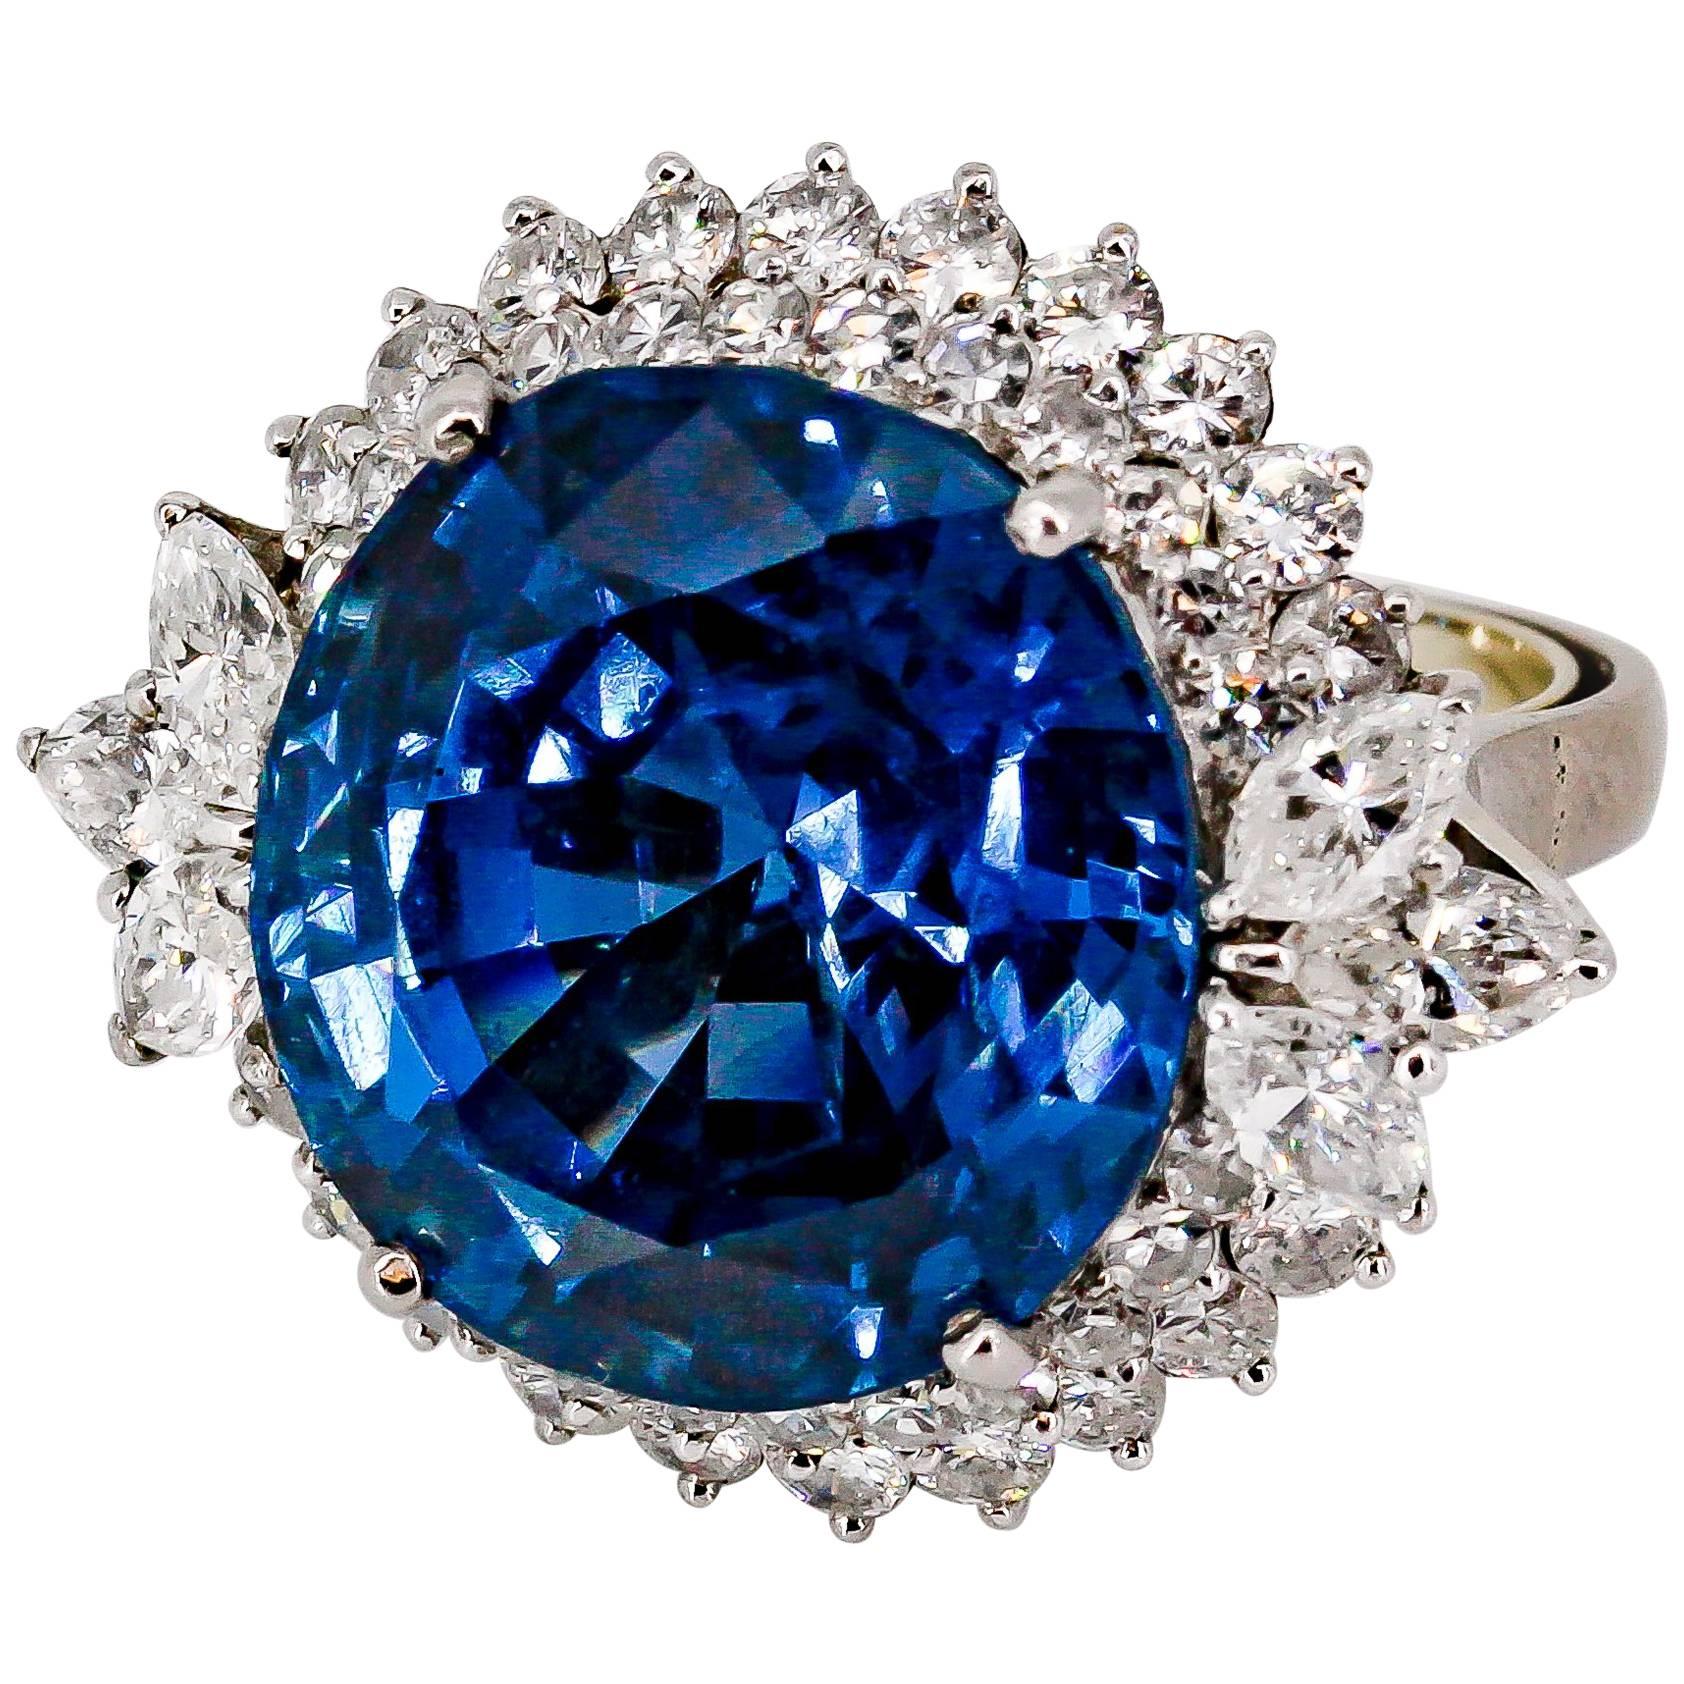 Impressive 27 Carat Untreated Burma Sapphire Diamond and Platinum Ring